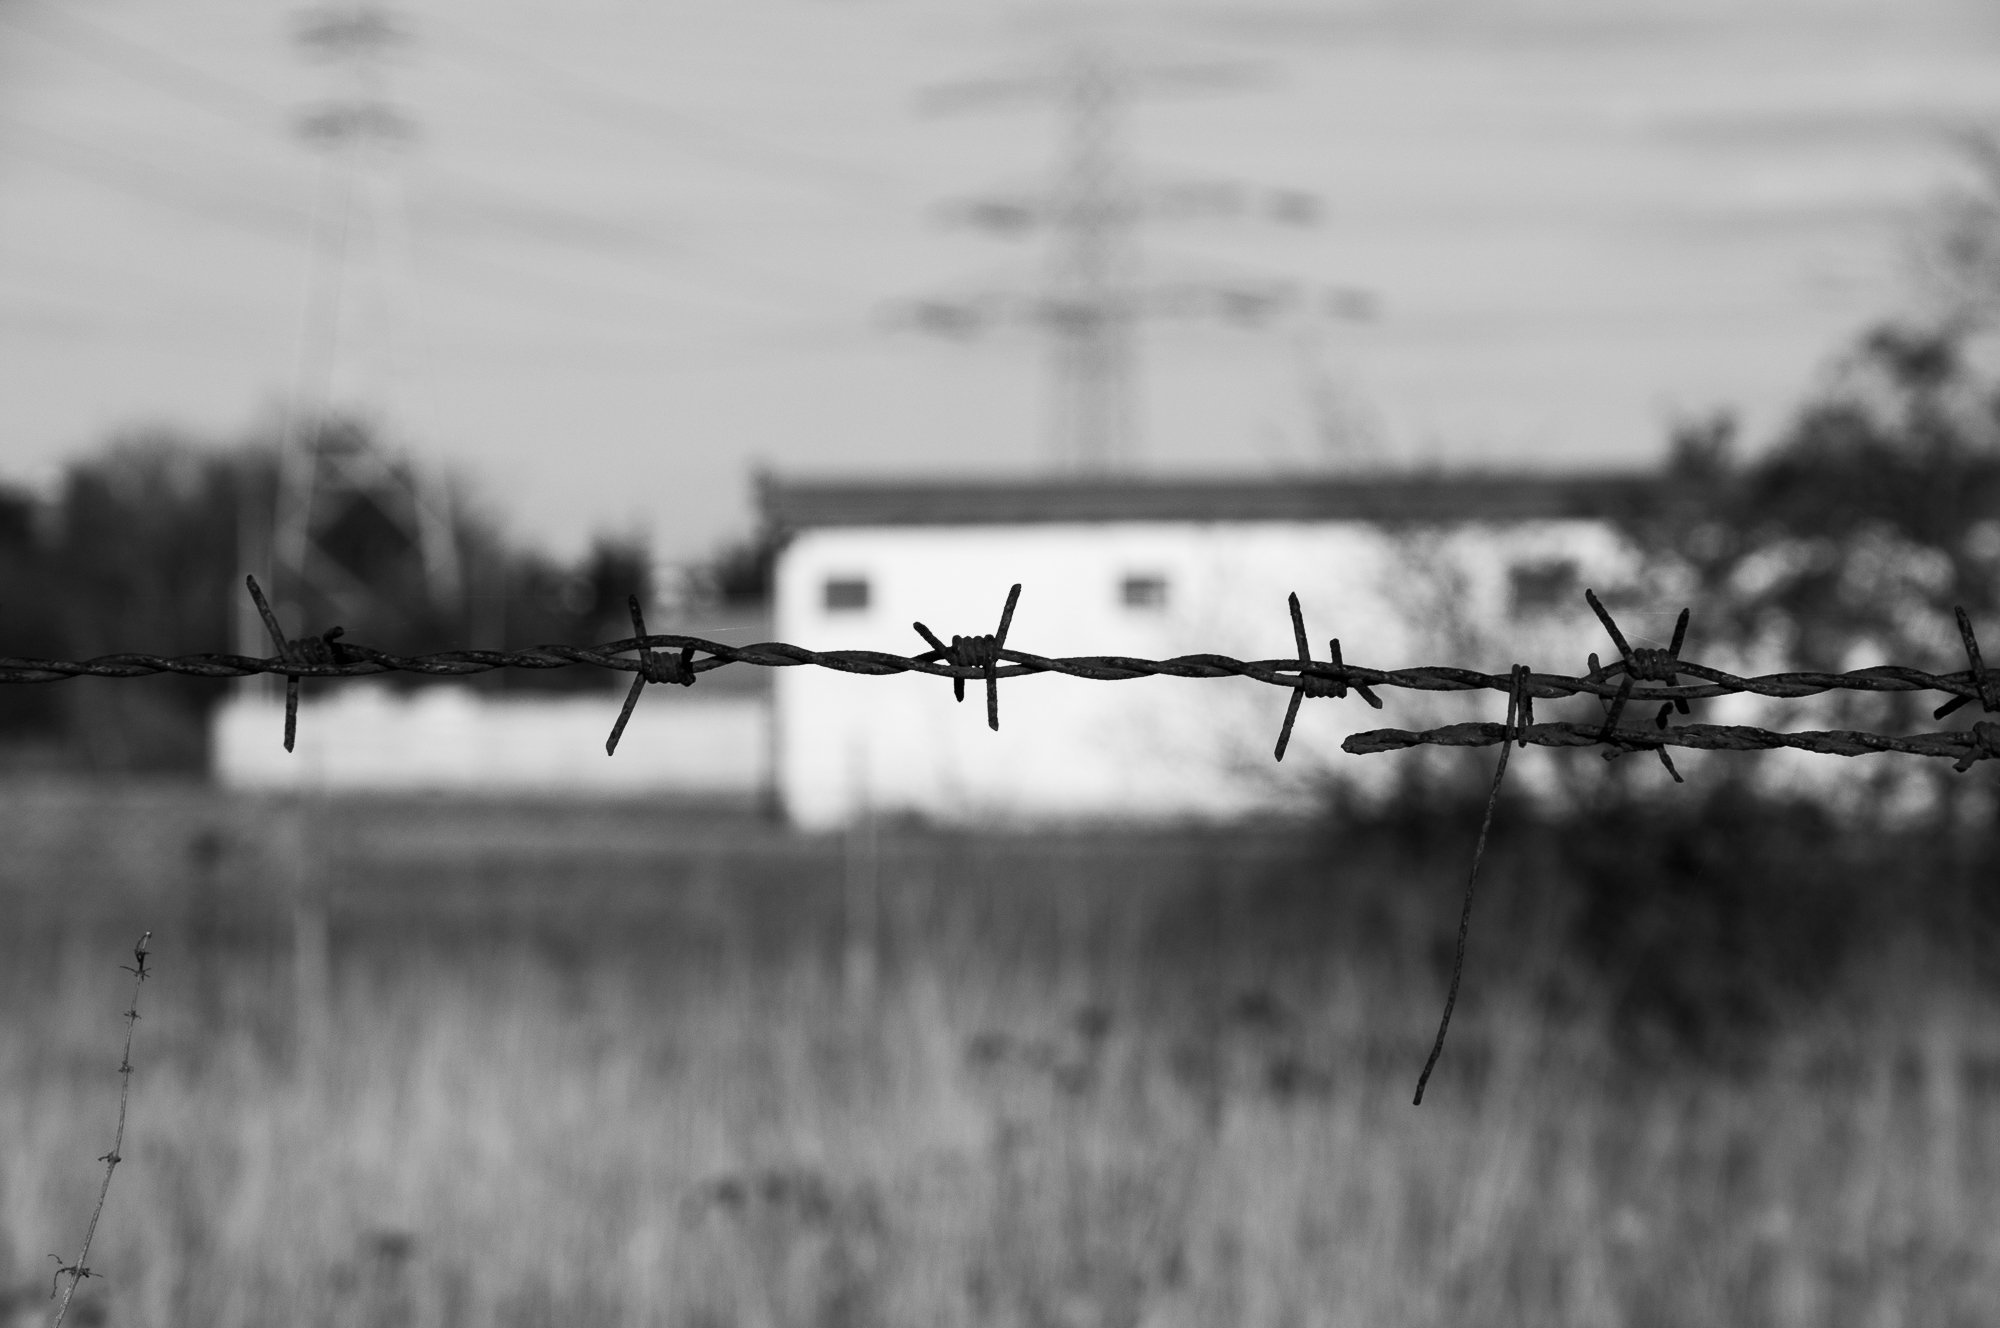 Adam Mazek Photography Warsaw 2021. Post: "Healthy skepticism." Minimalism. Barbed wire.